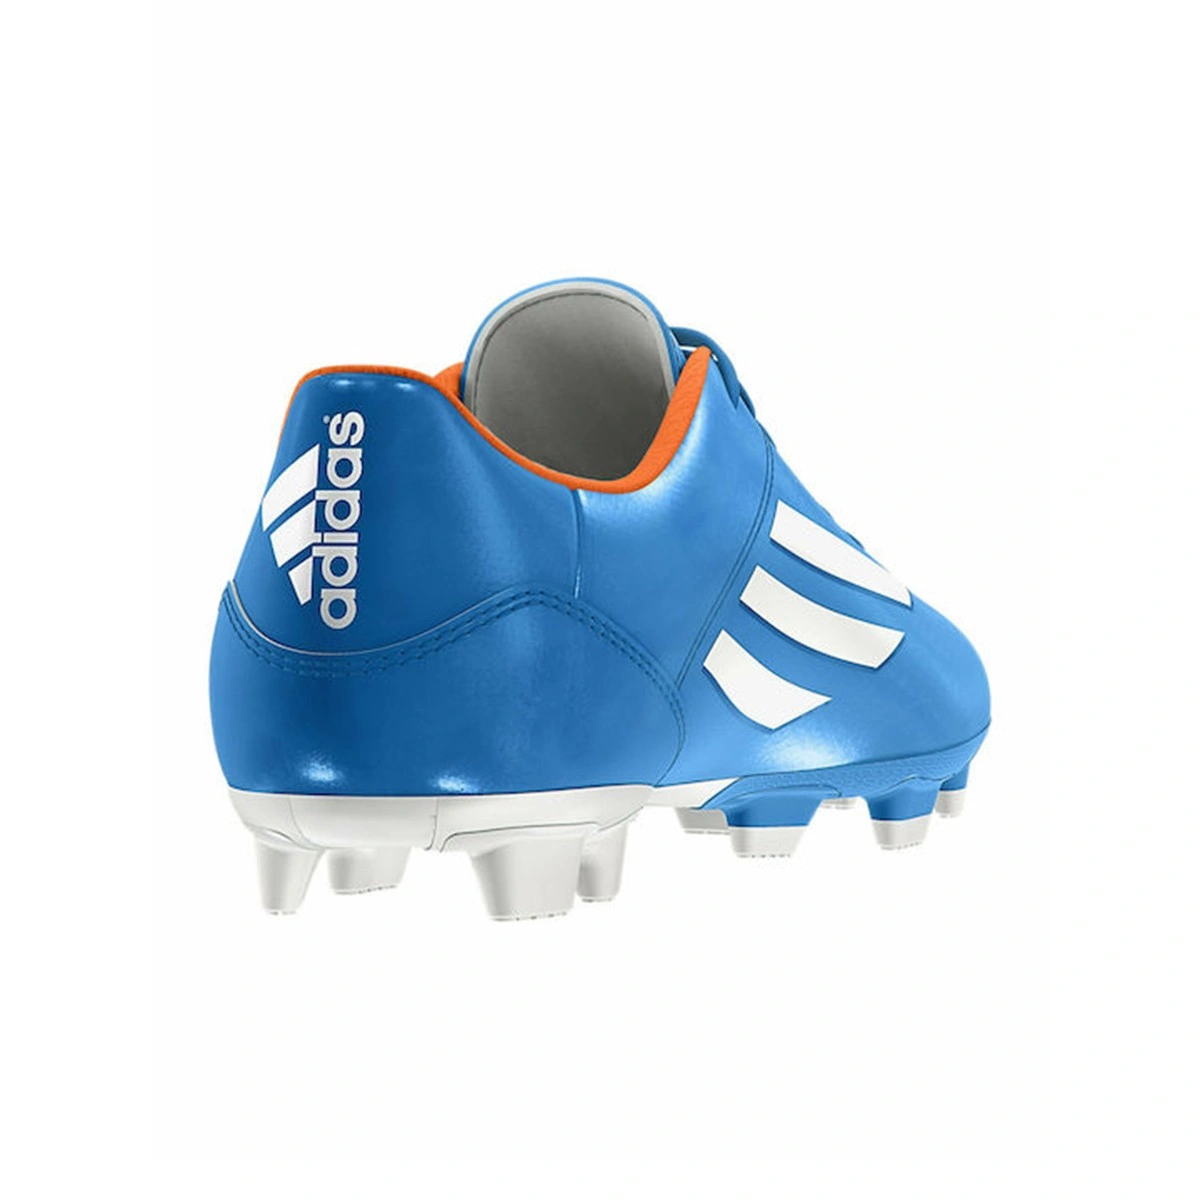 Adidas Παιδικά Ποδοσφαιρικά Παπούτσια F5 TRX FG με Τάπες Μπλε - F32750 -  Spot Team